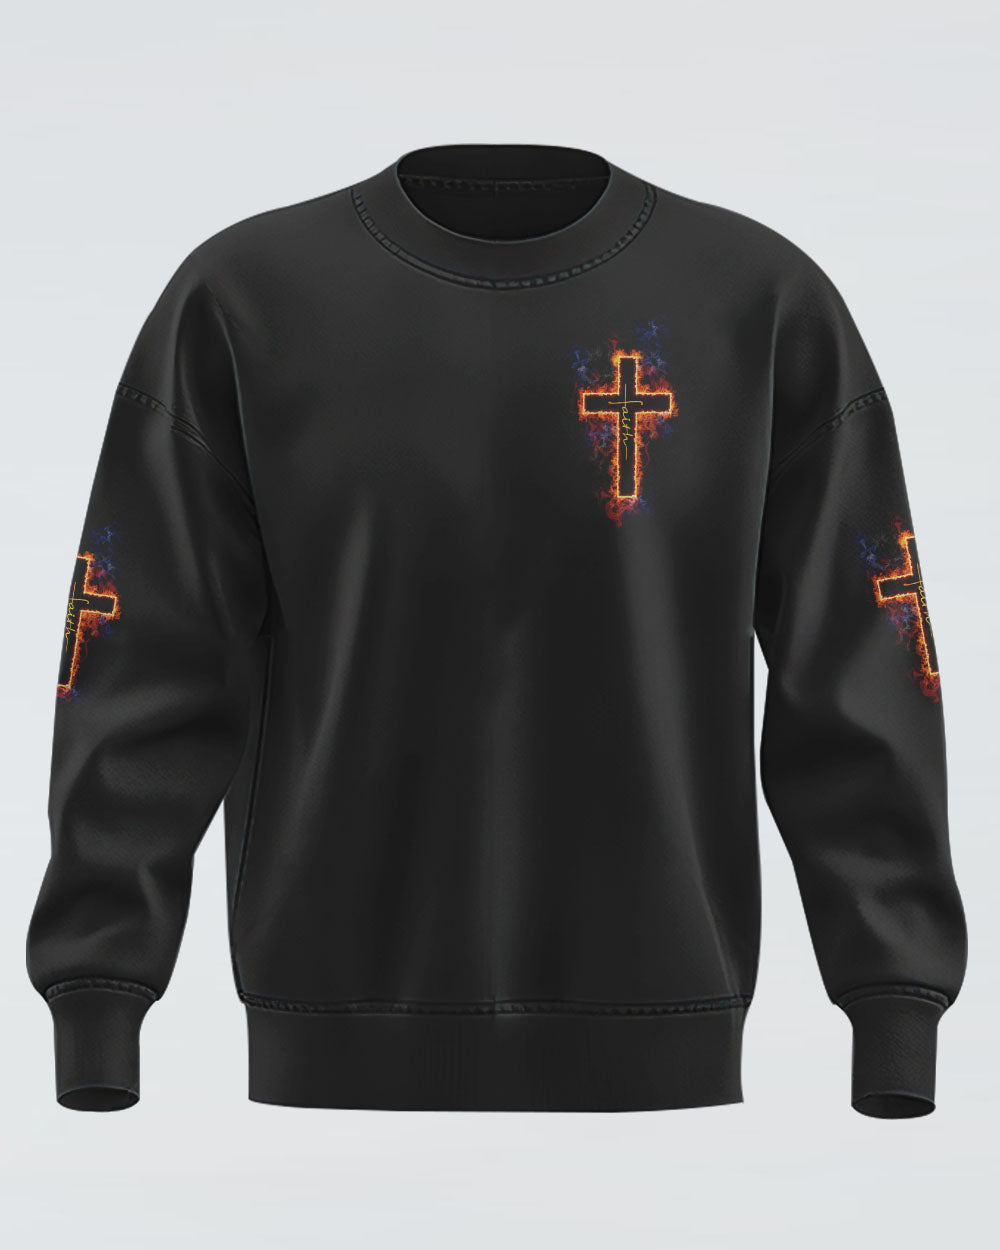 Way Maker Miracle Worker Fire Cross Men's Christian Sweatshirt